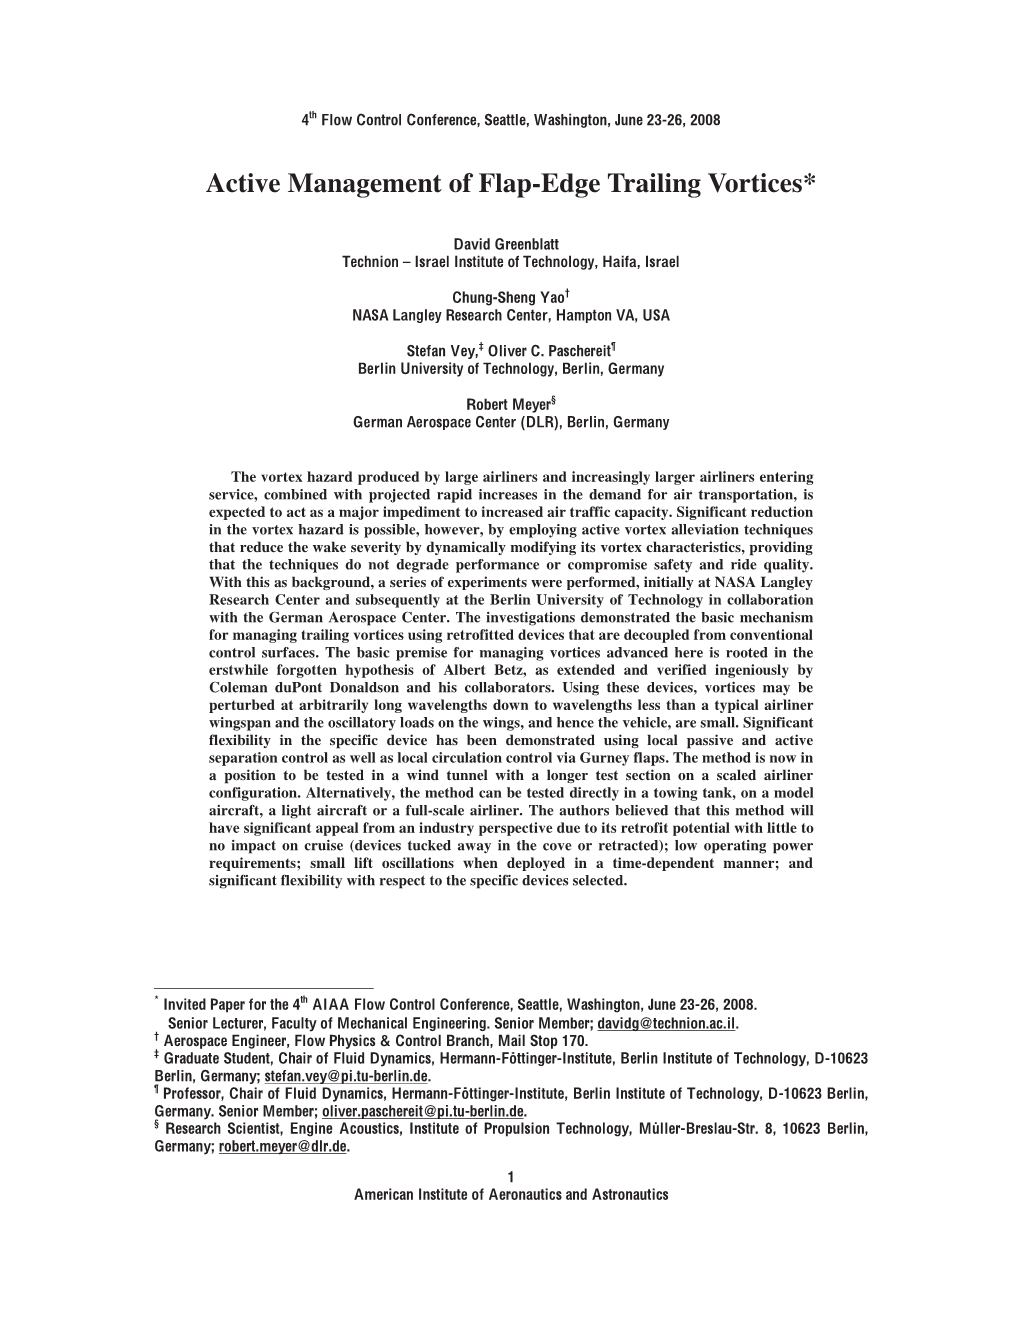 Active Management of Flap-Edge Trailing Vortices*